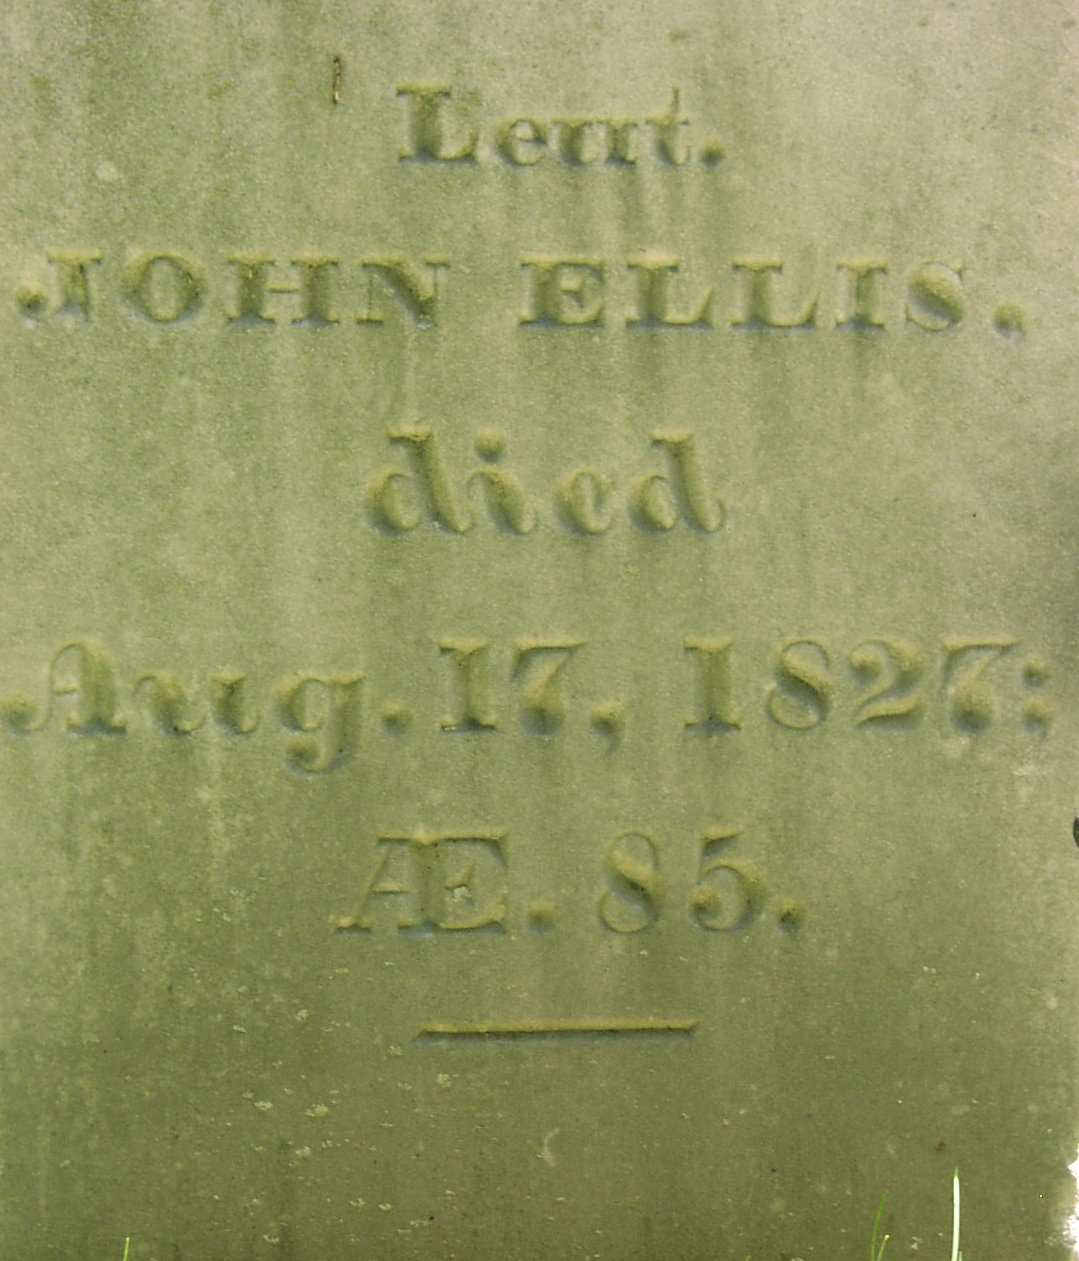 Gravestone inscription of John Ellis